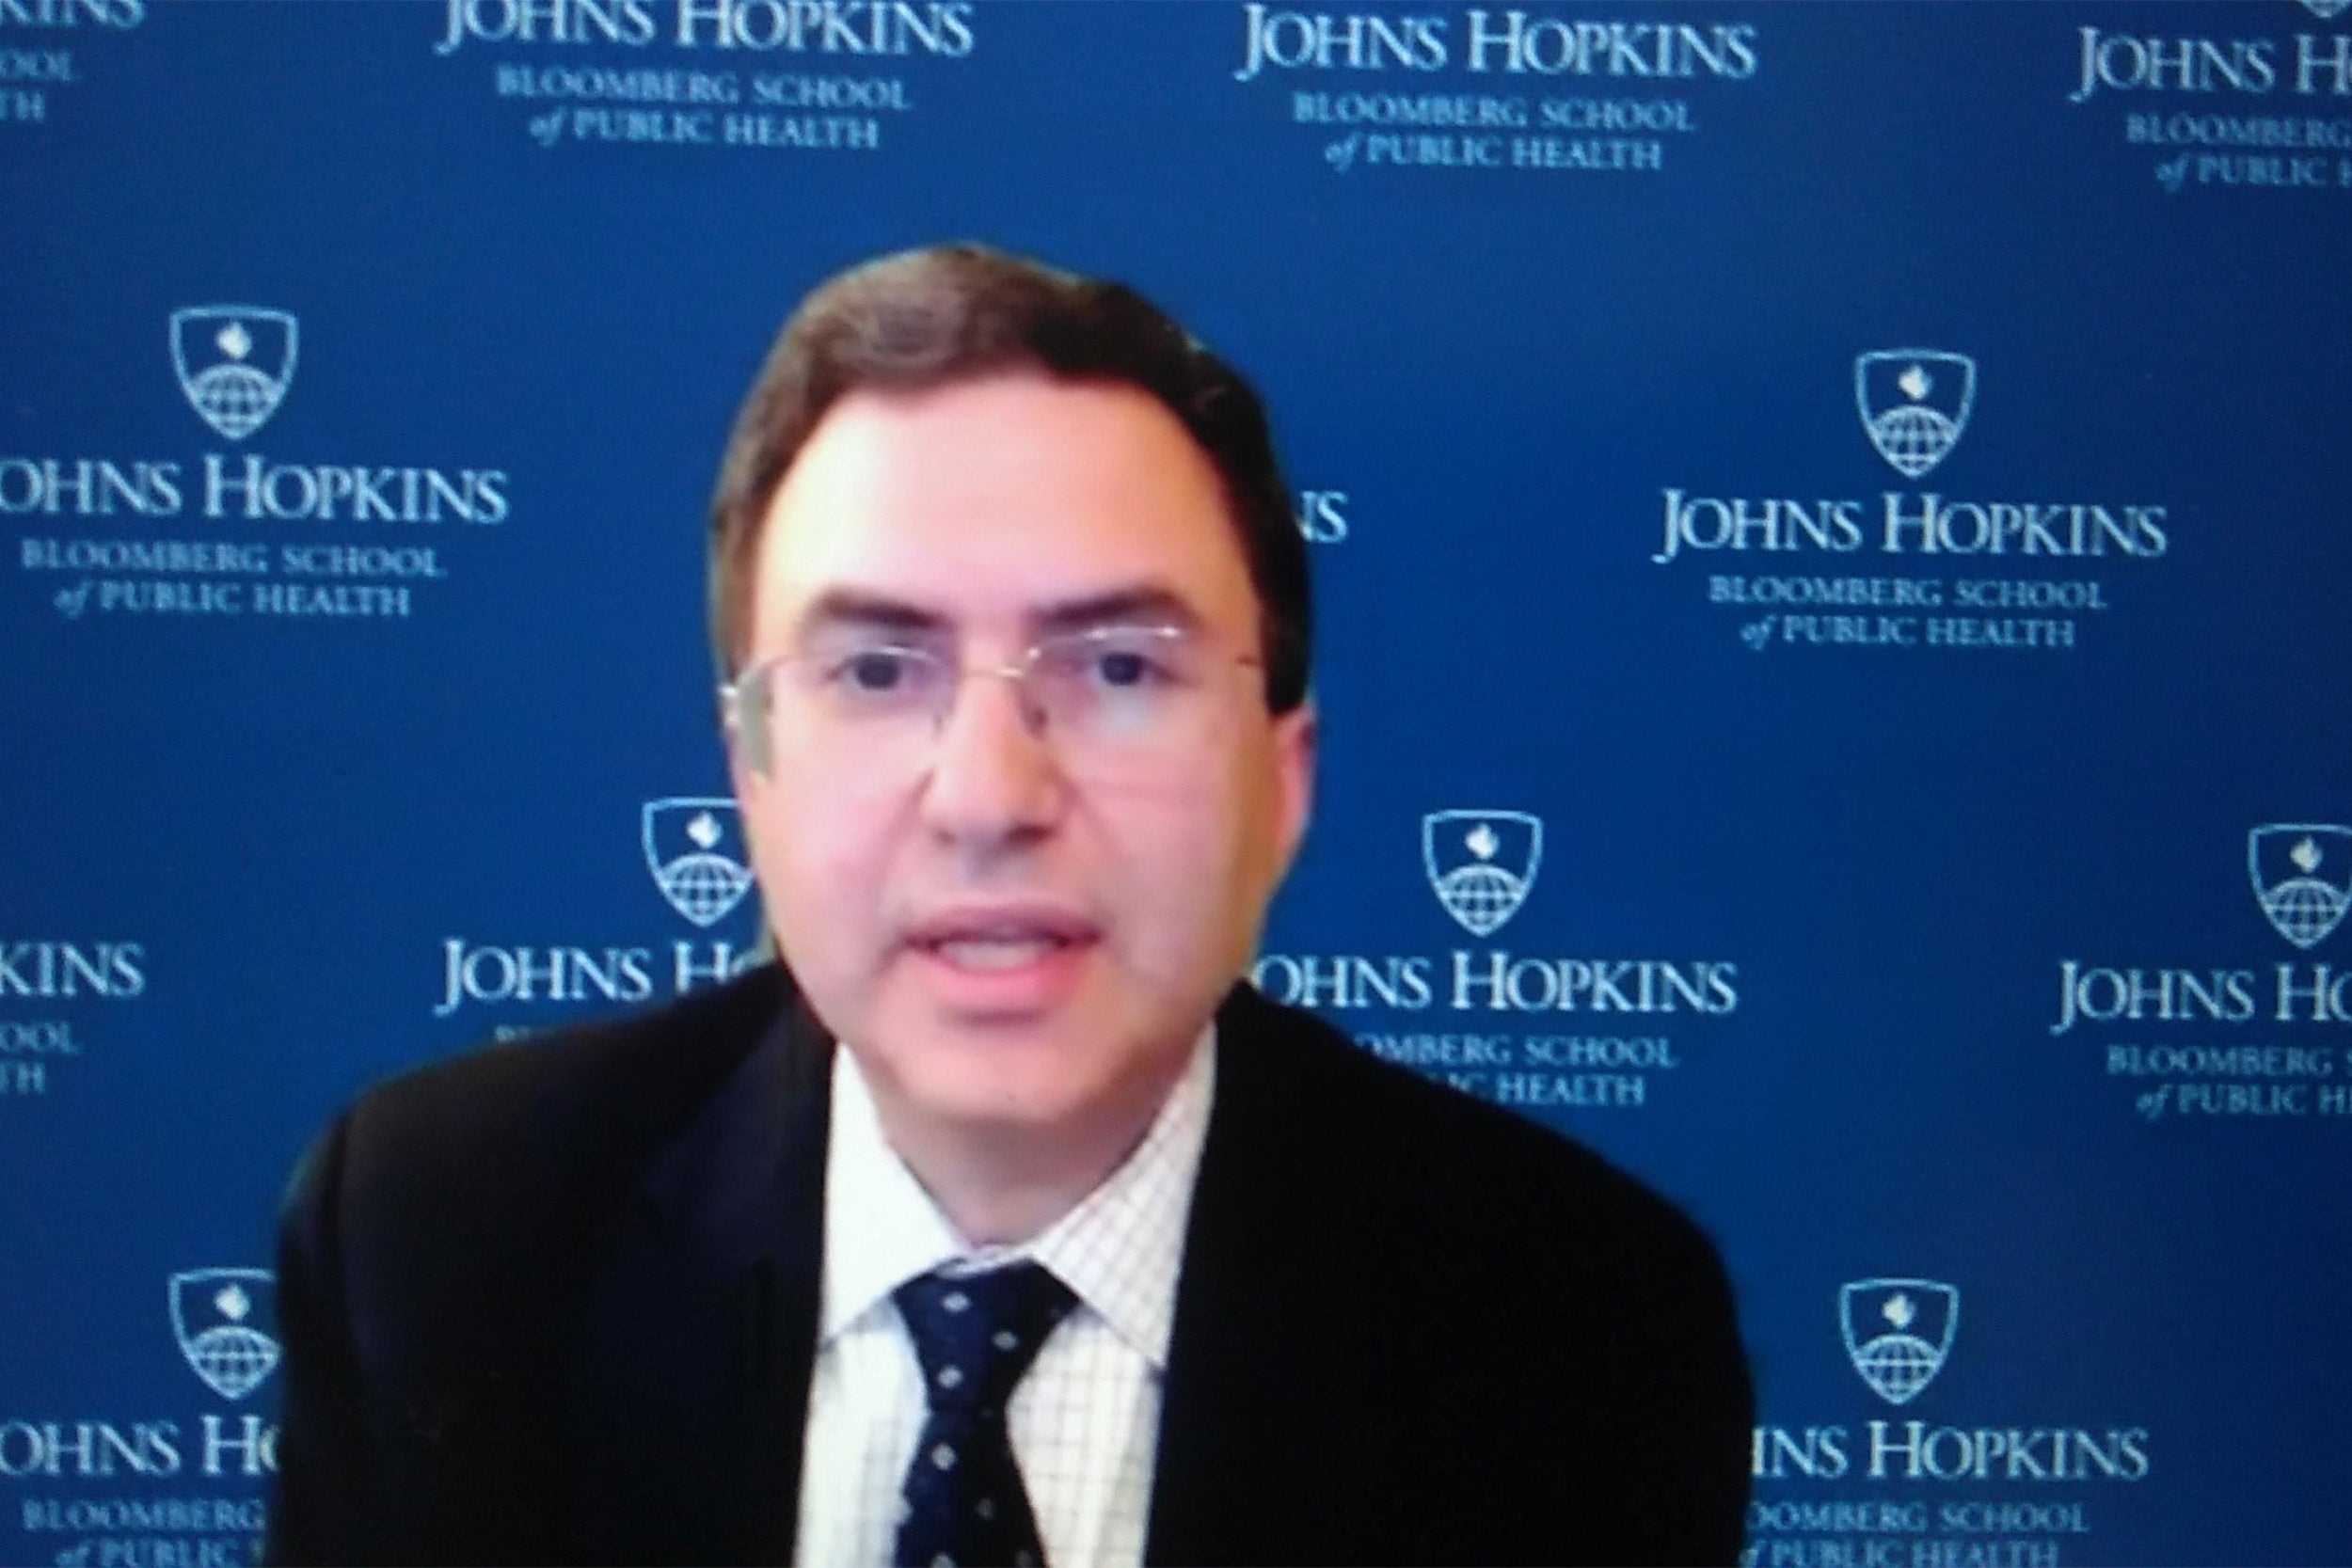 Joshua Sharfstein of the Johns Hopkins Bloomberg School of Public Health.